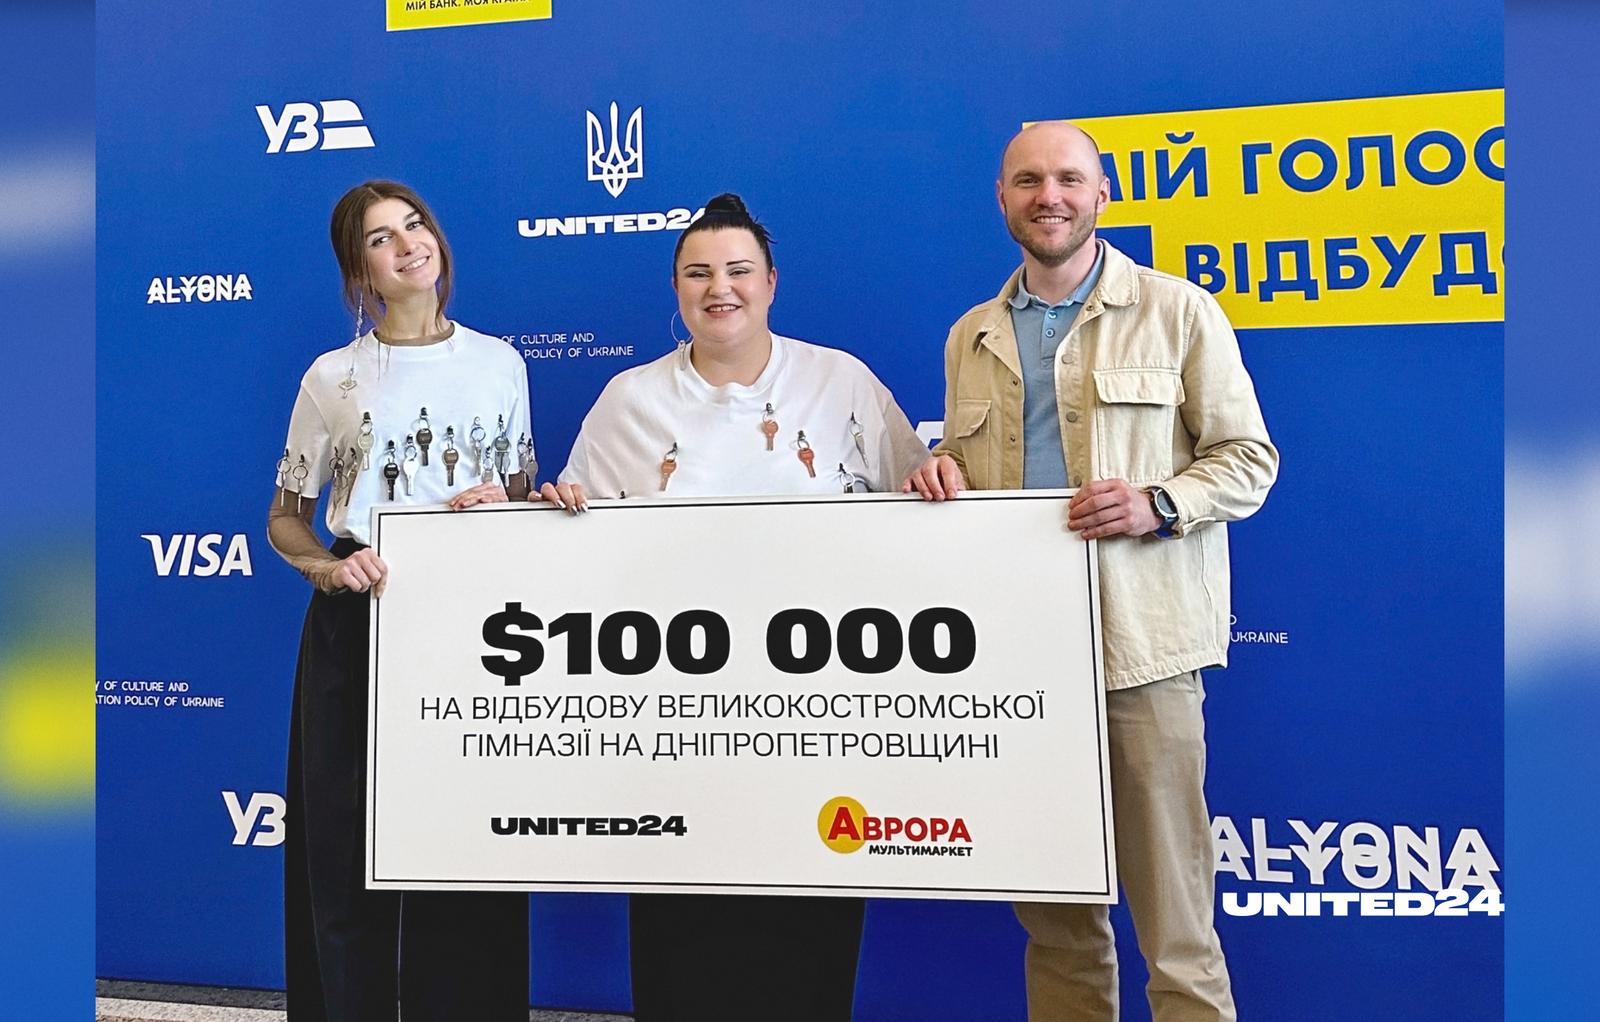 100,000 USD from the Avrora multimarket chain to rebuild Velykokostromska School